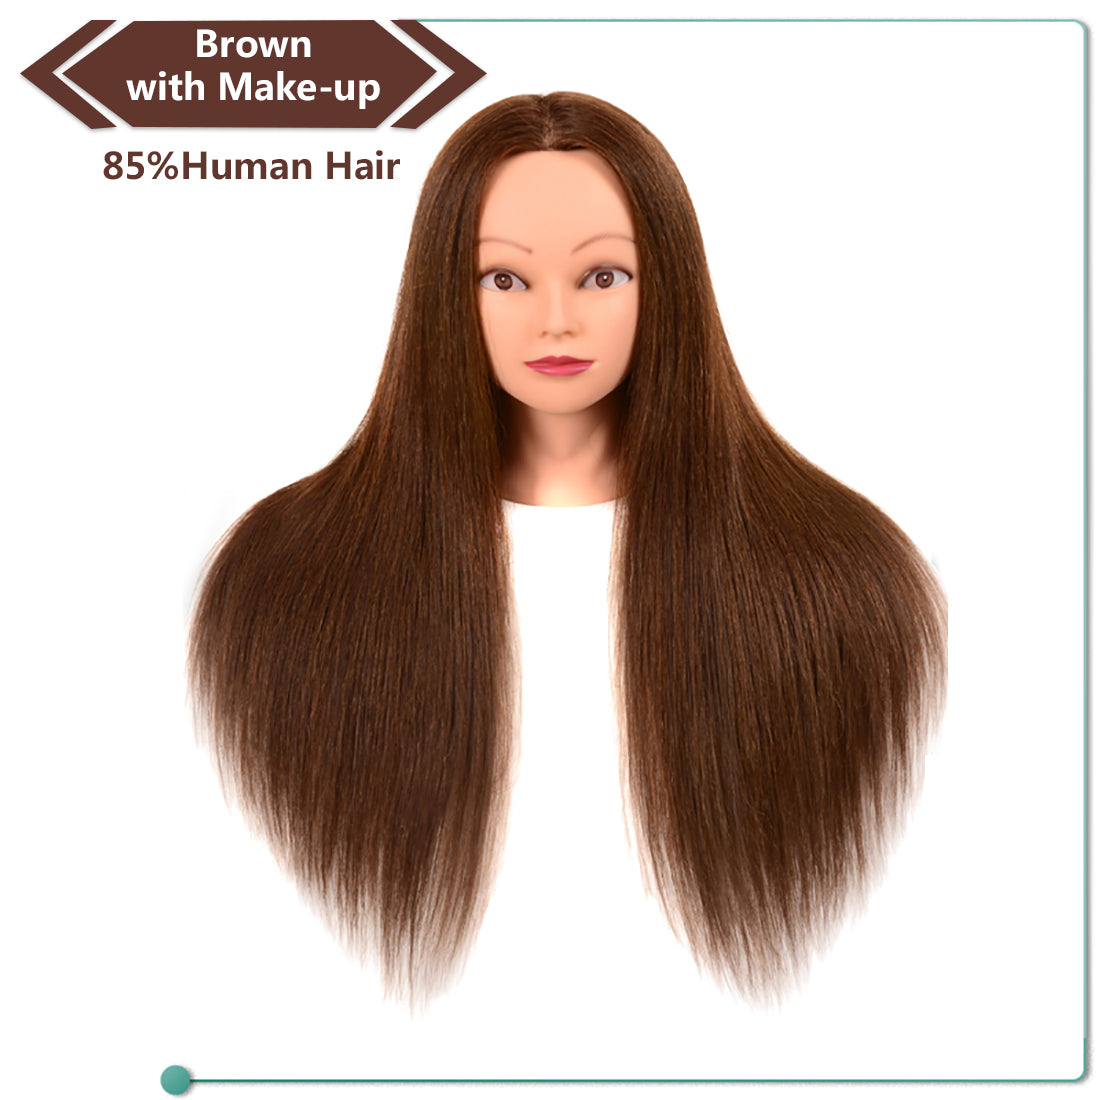 Training Head Curly Hair Mannequin Head Hairdressing Training Head for Hair  Styling Practice Hair Braiding Dummy Head with 100% Human Hair Black price  in Saudi Arabia,  Saudi Arabia